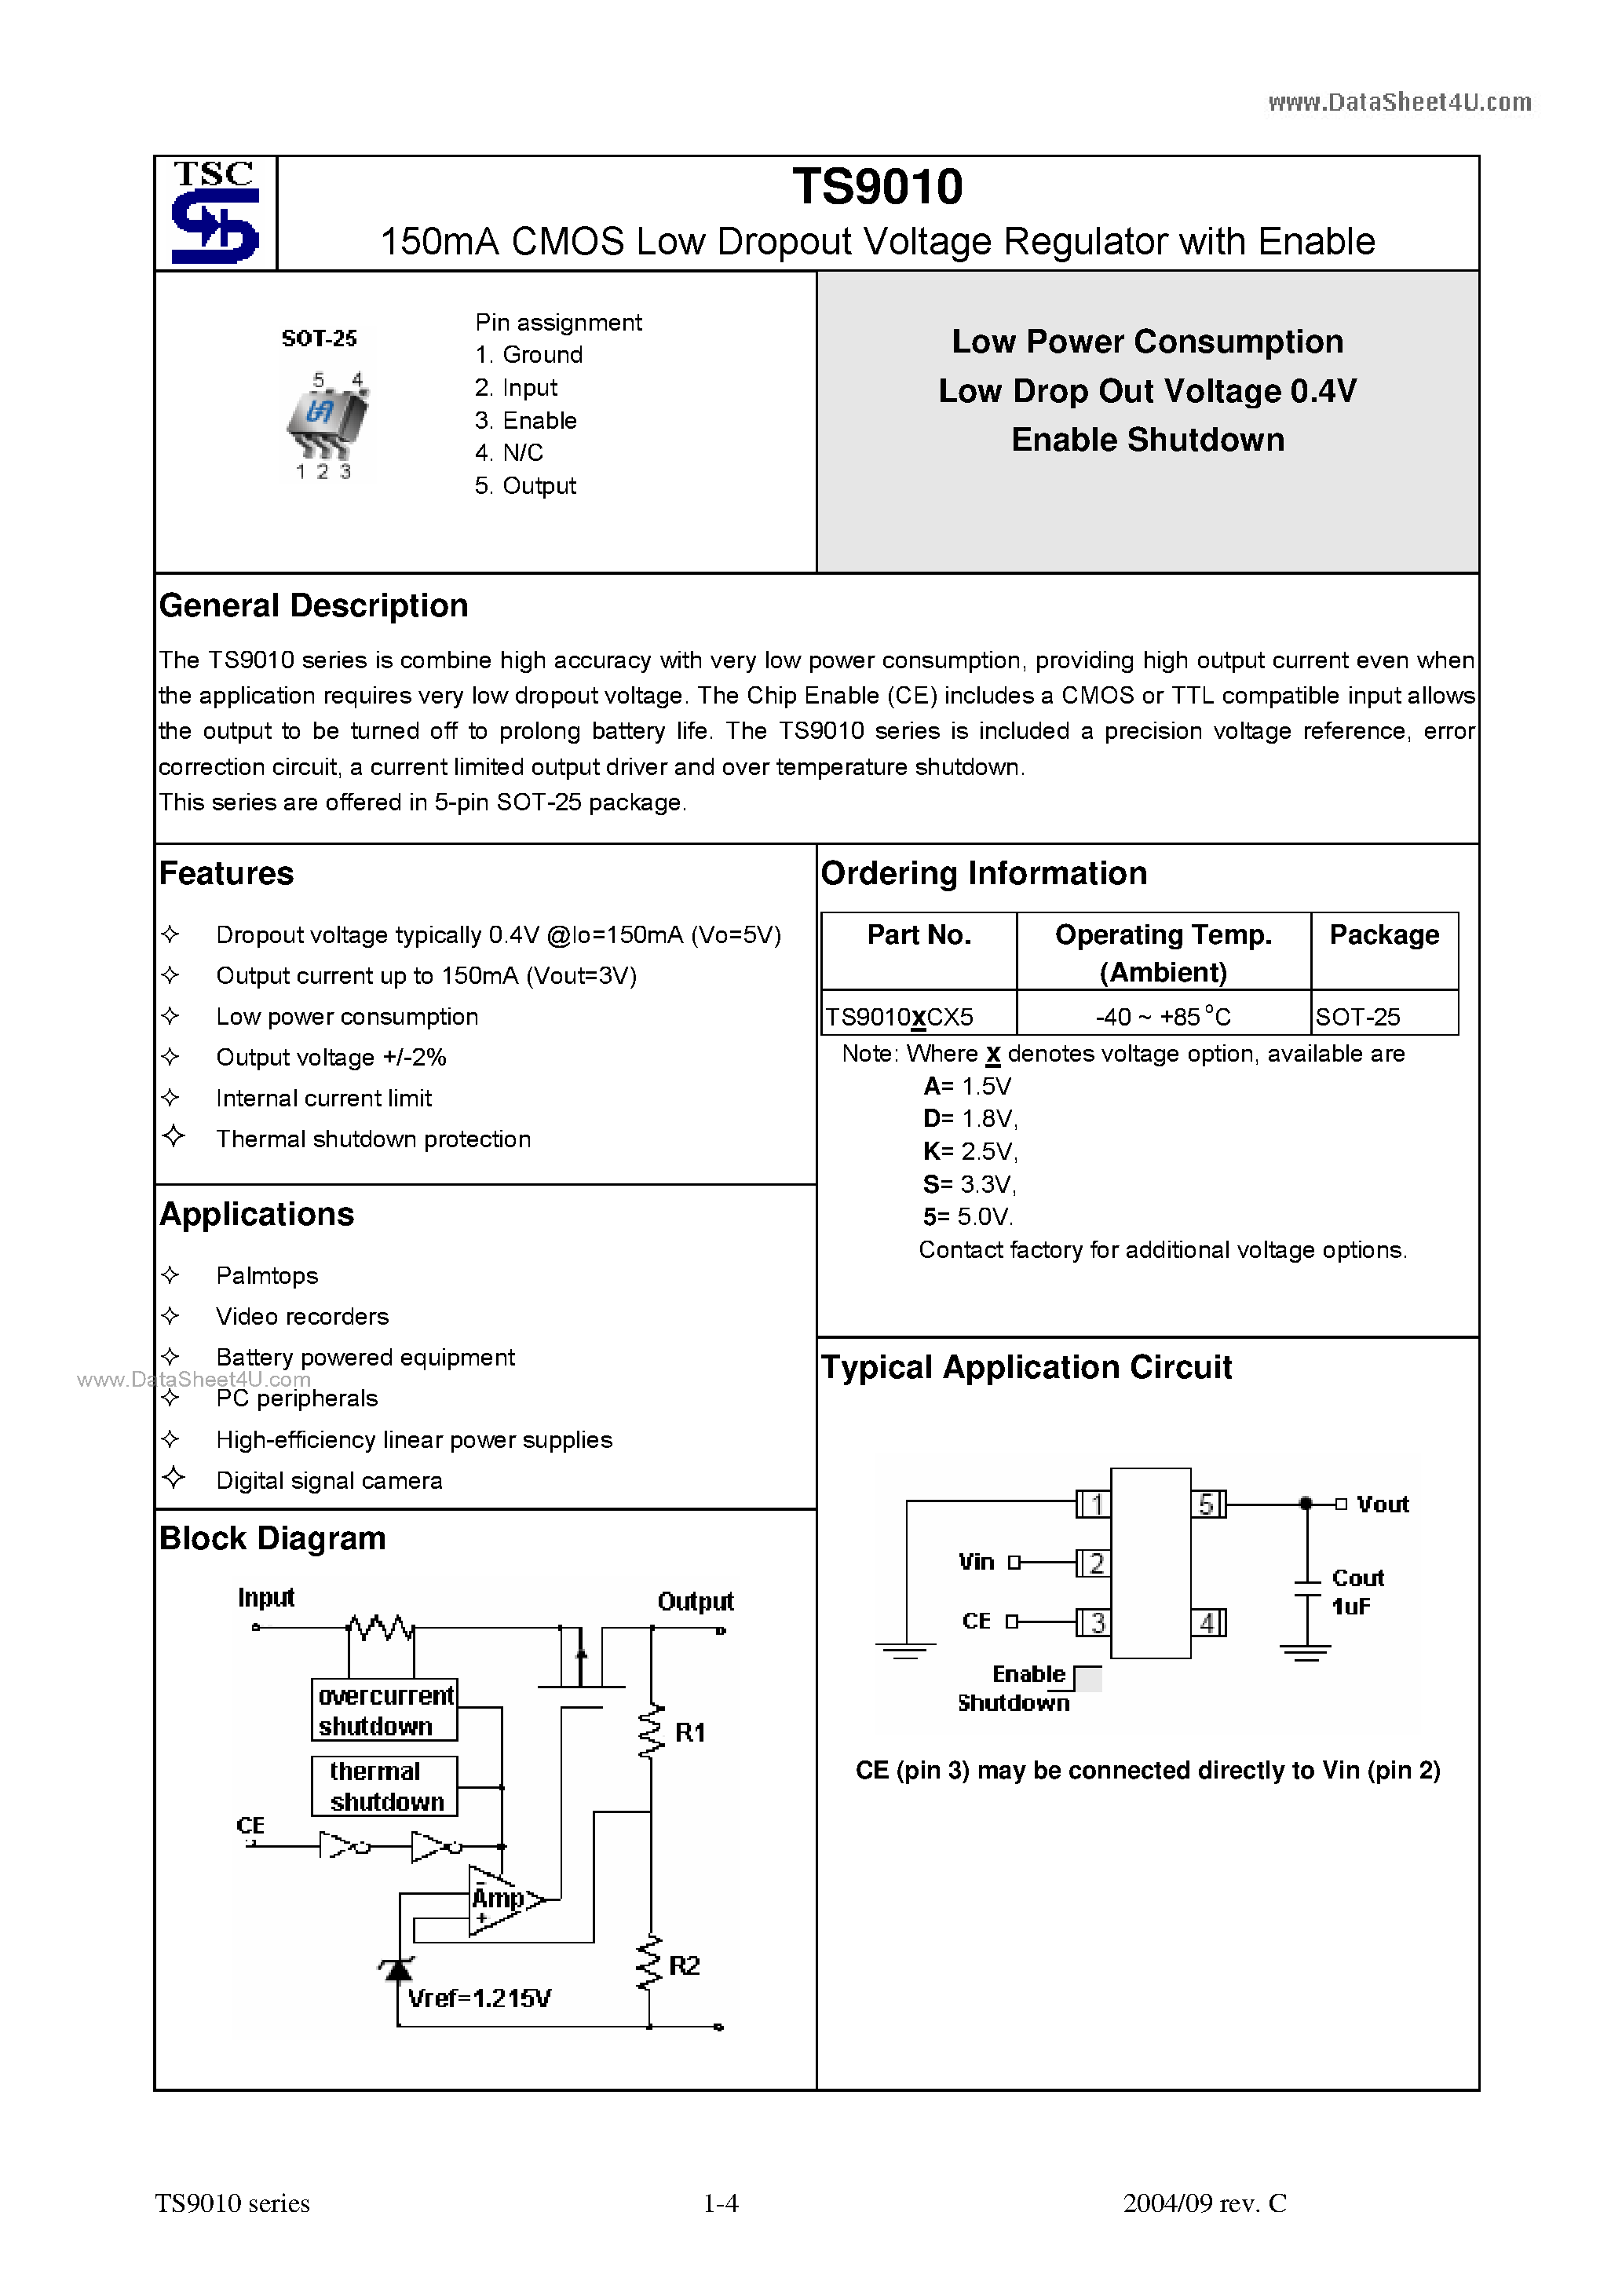 Даташит TS9010 - 150mA CMOS Low Dropout Voltage Regulator страница 1